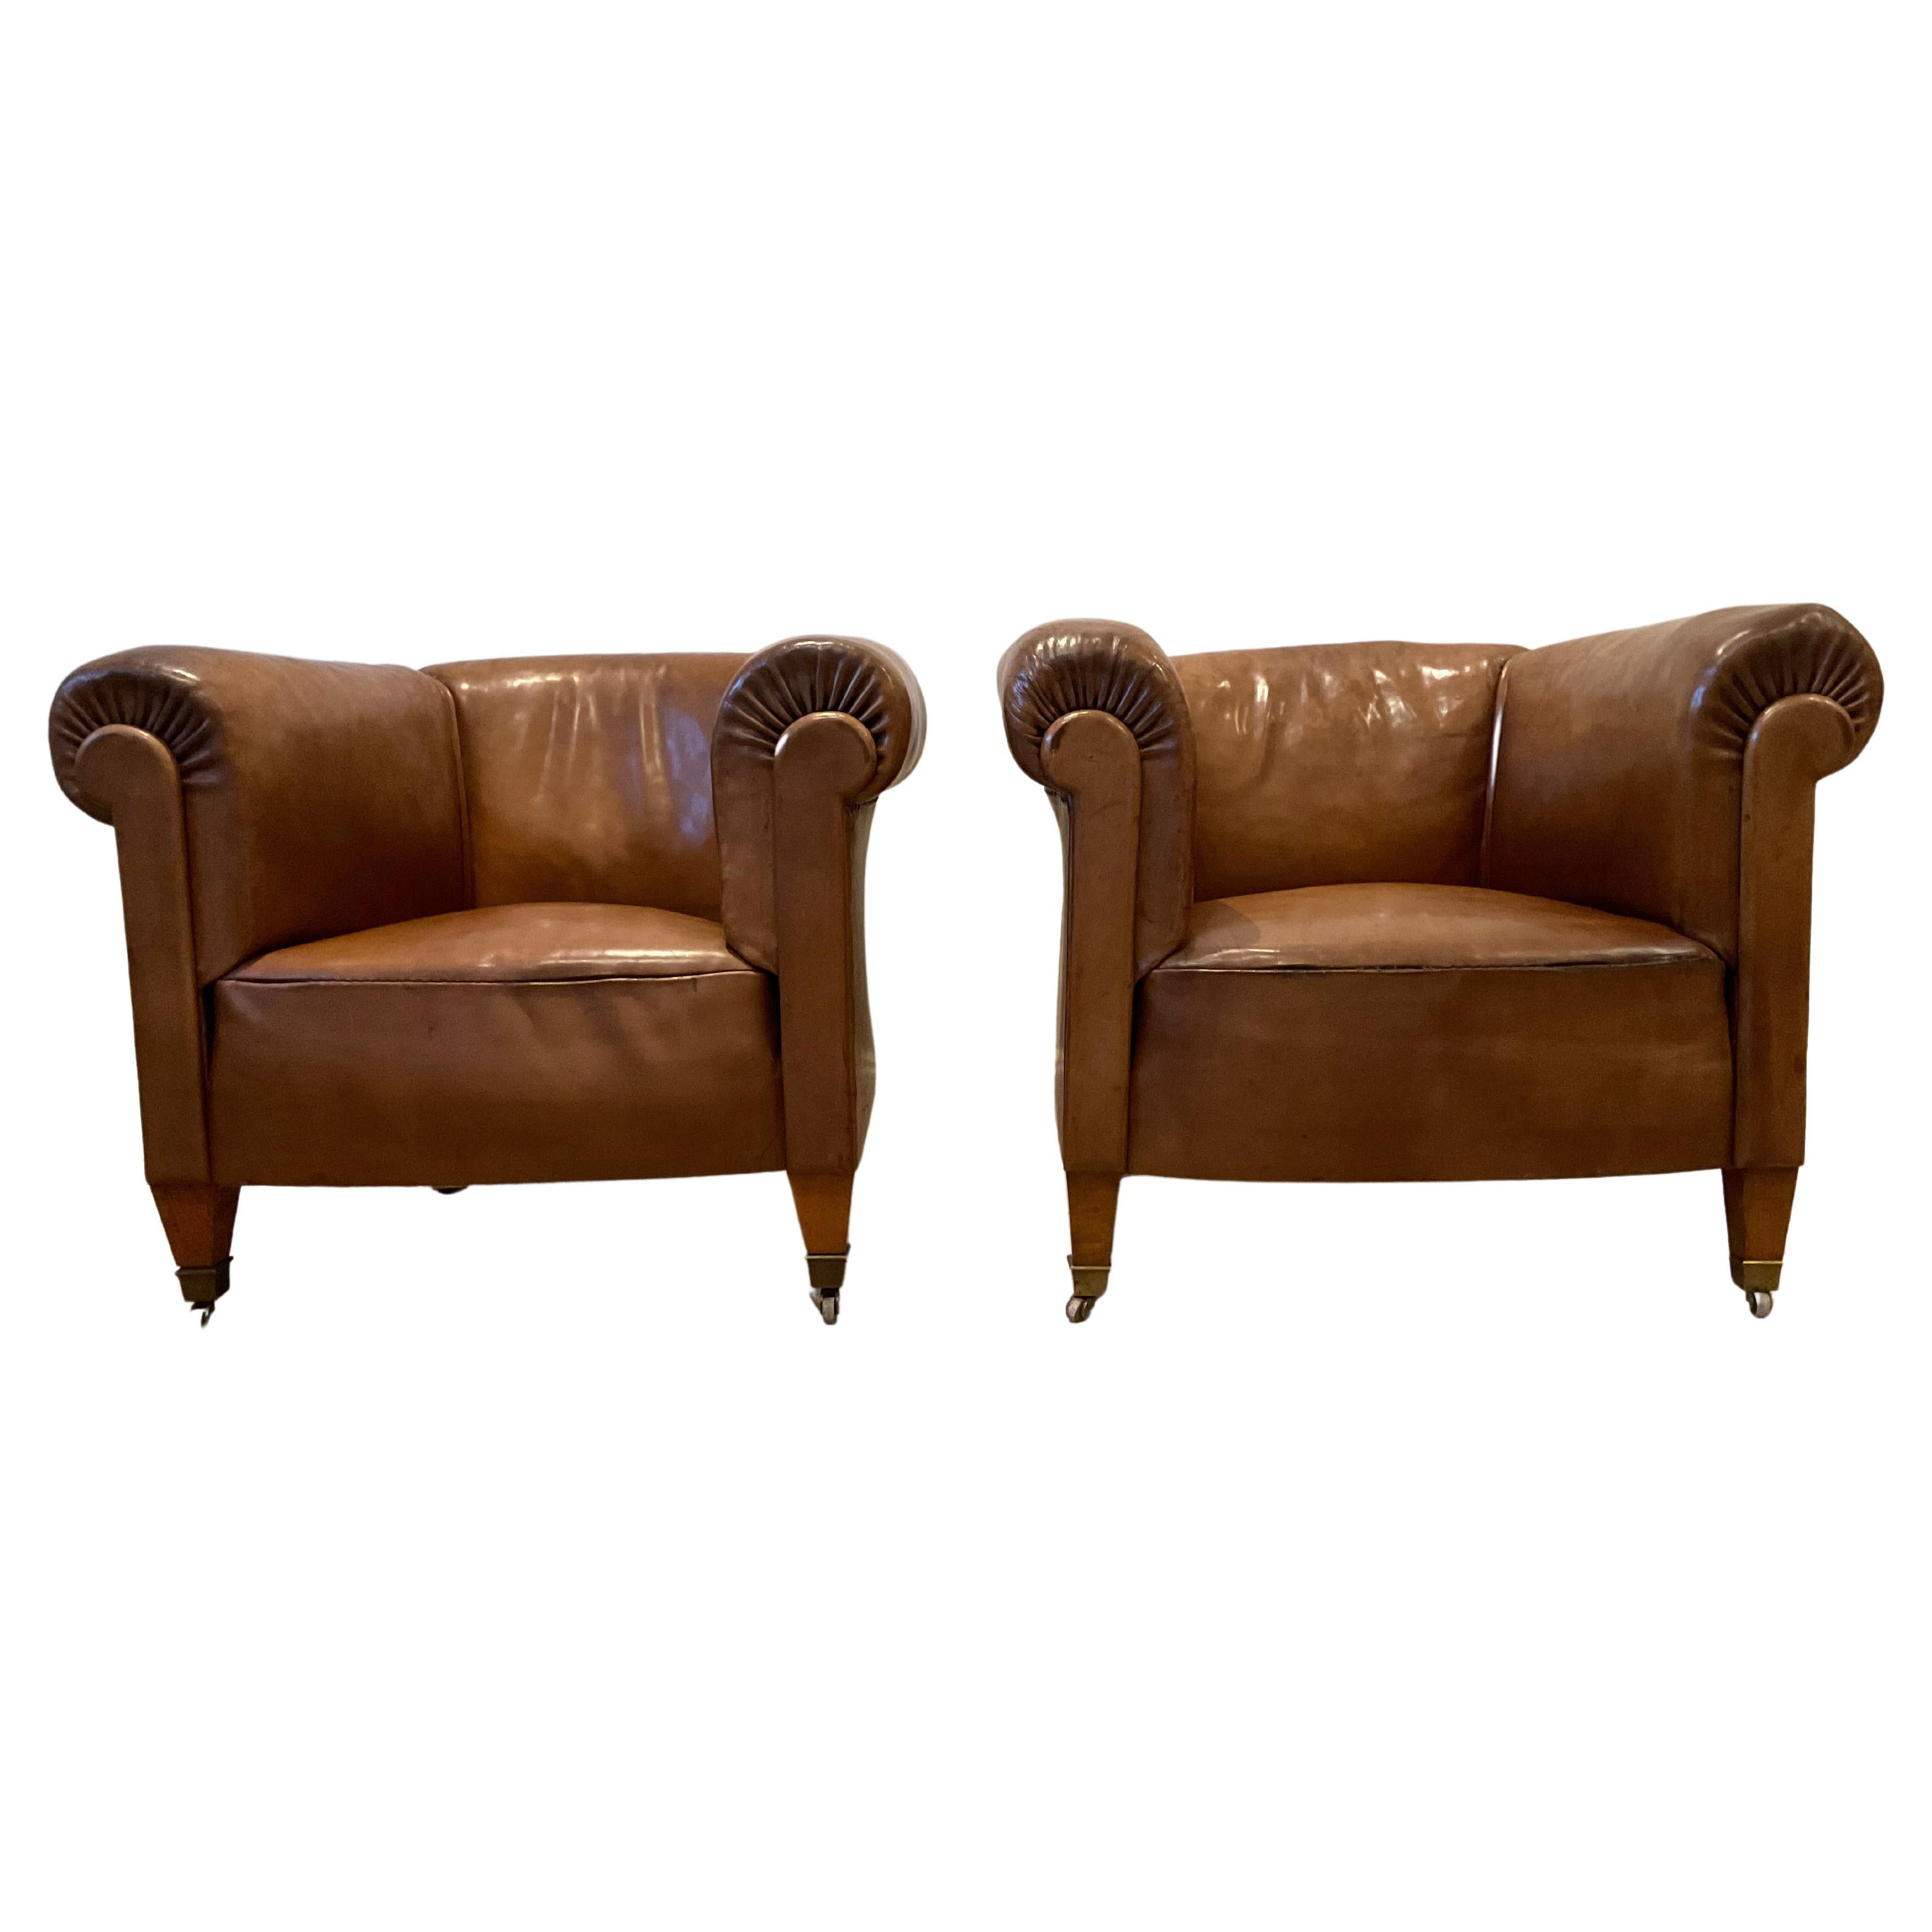 Pair of 1920s Swedish Tan Original Leather Club Chairs